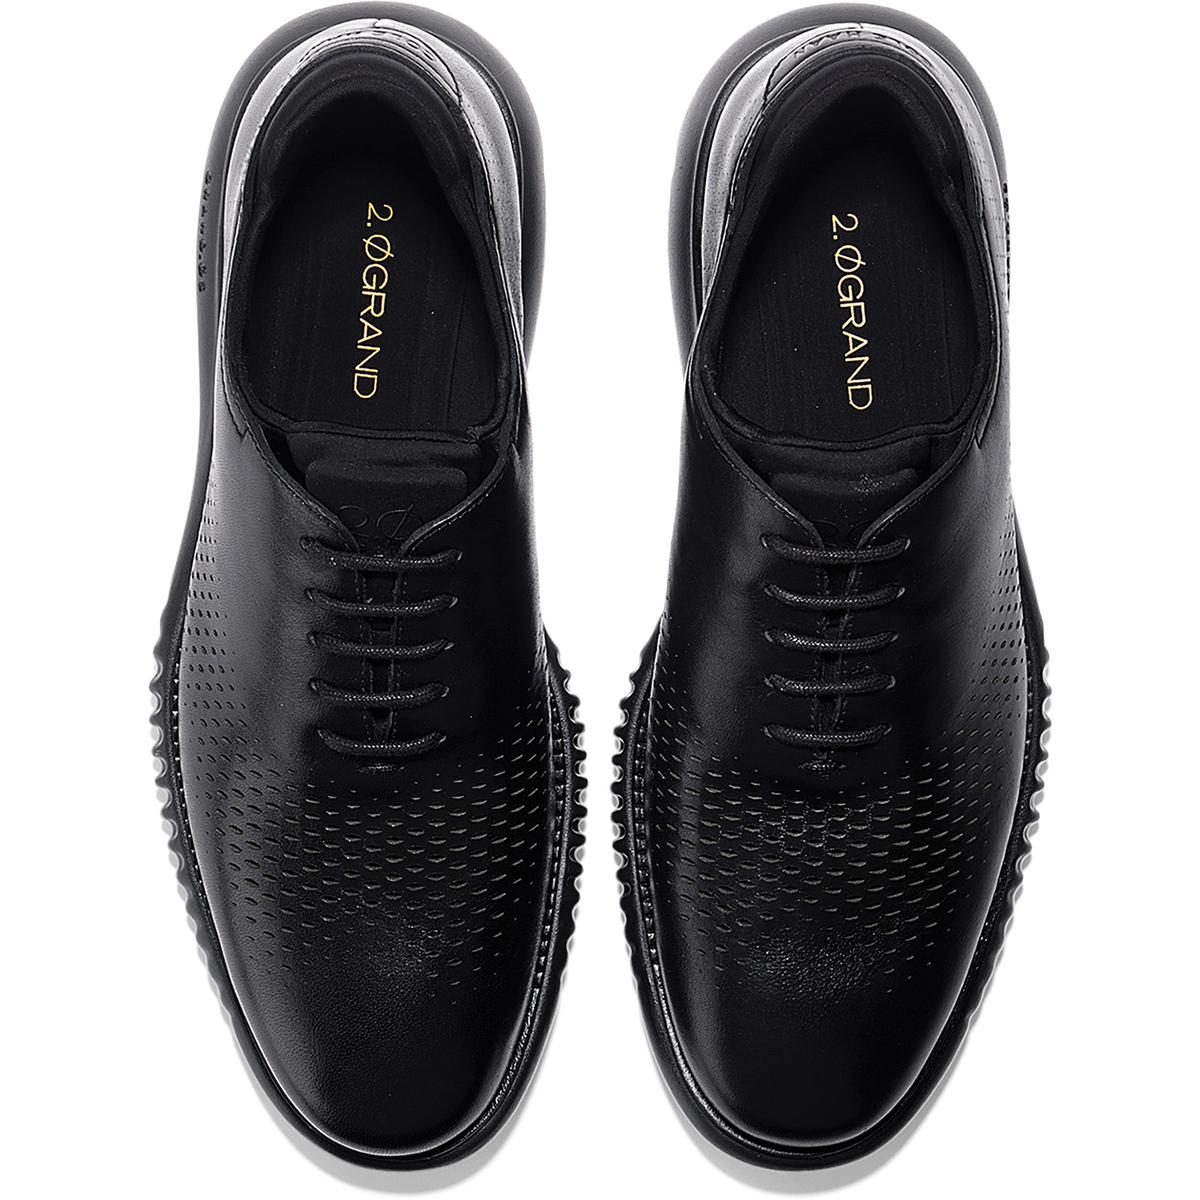 Cole Haan Mens 2 Zerogrand Black Leather Oxfords Shoes 9.5 Medium (D ...